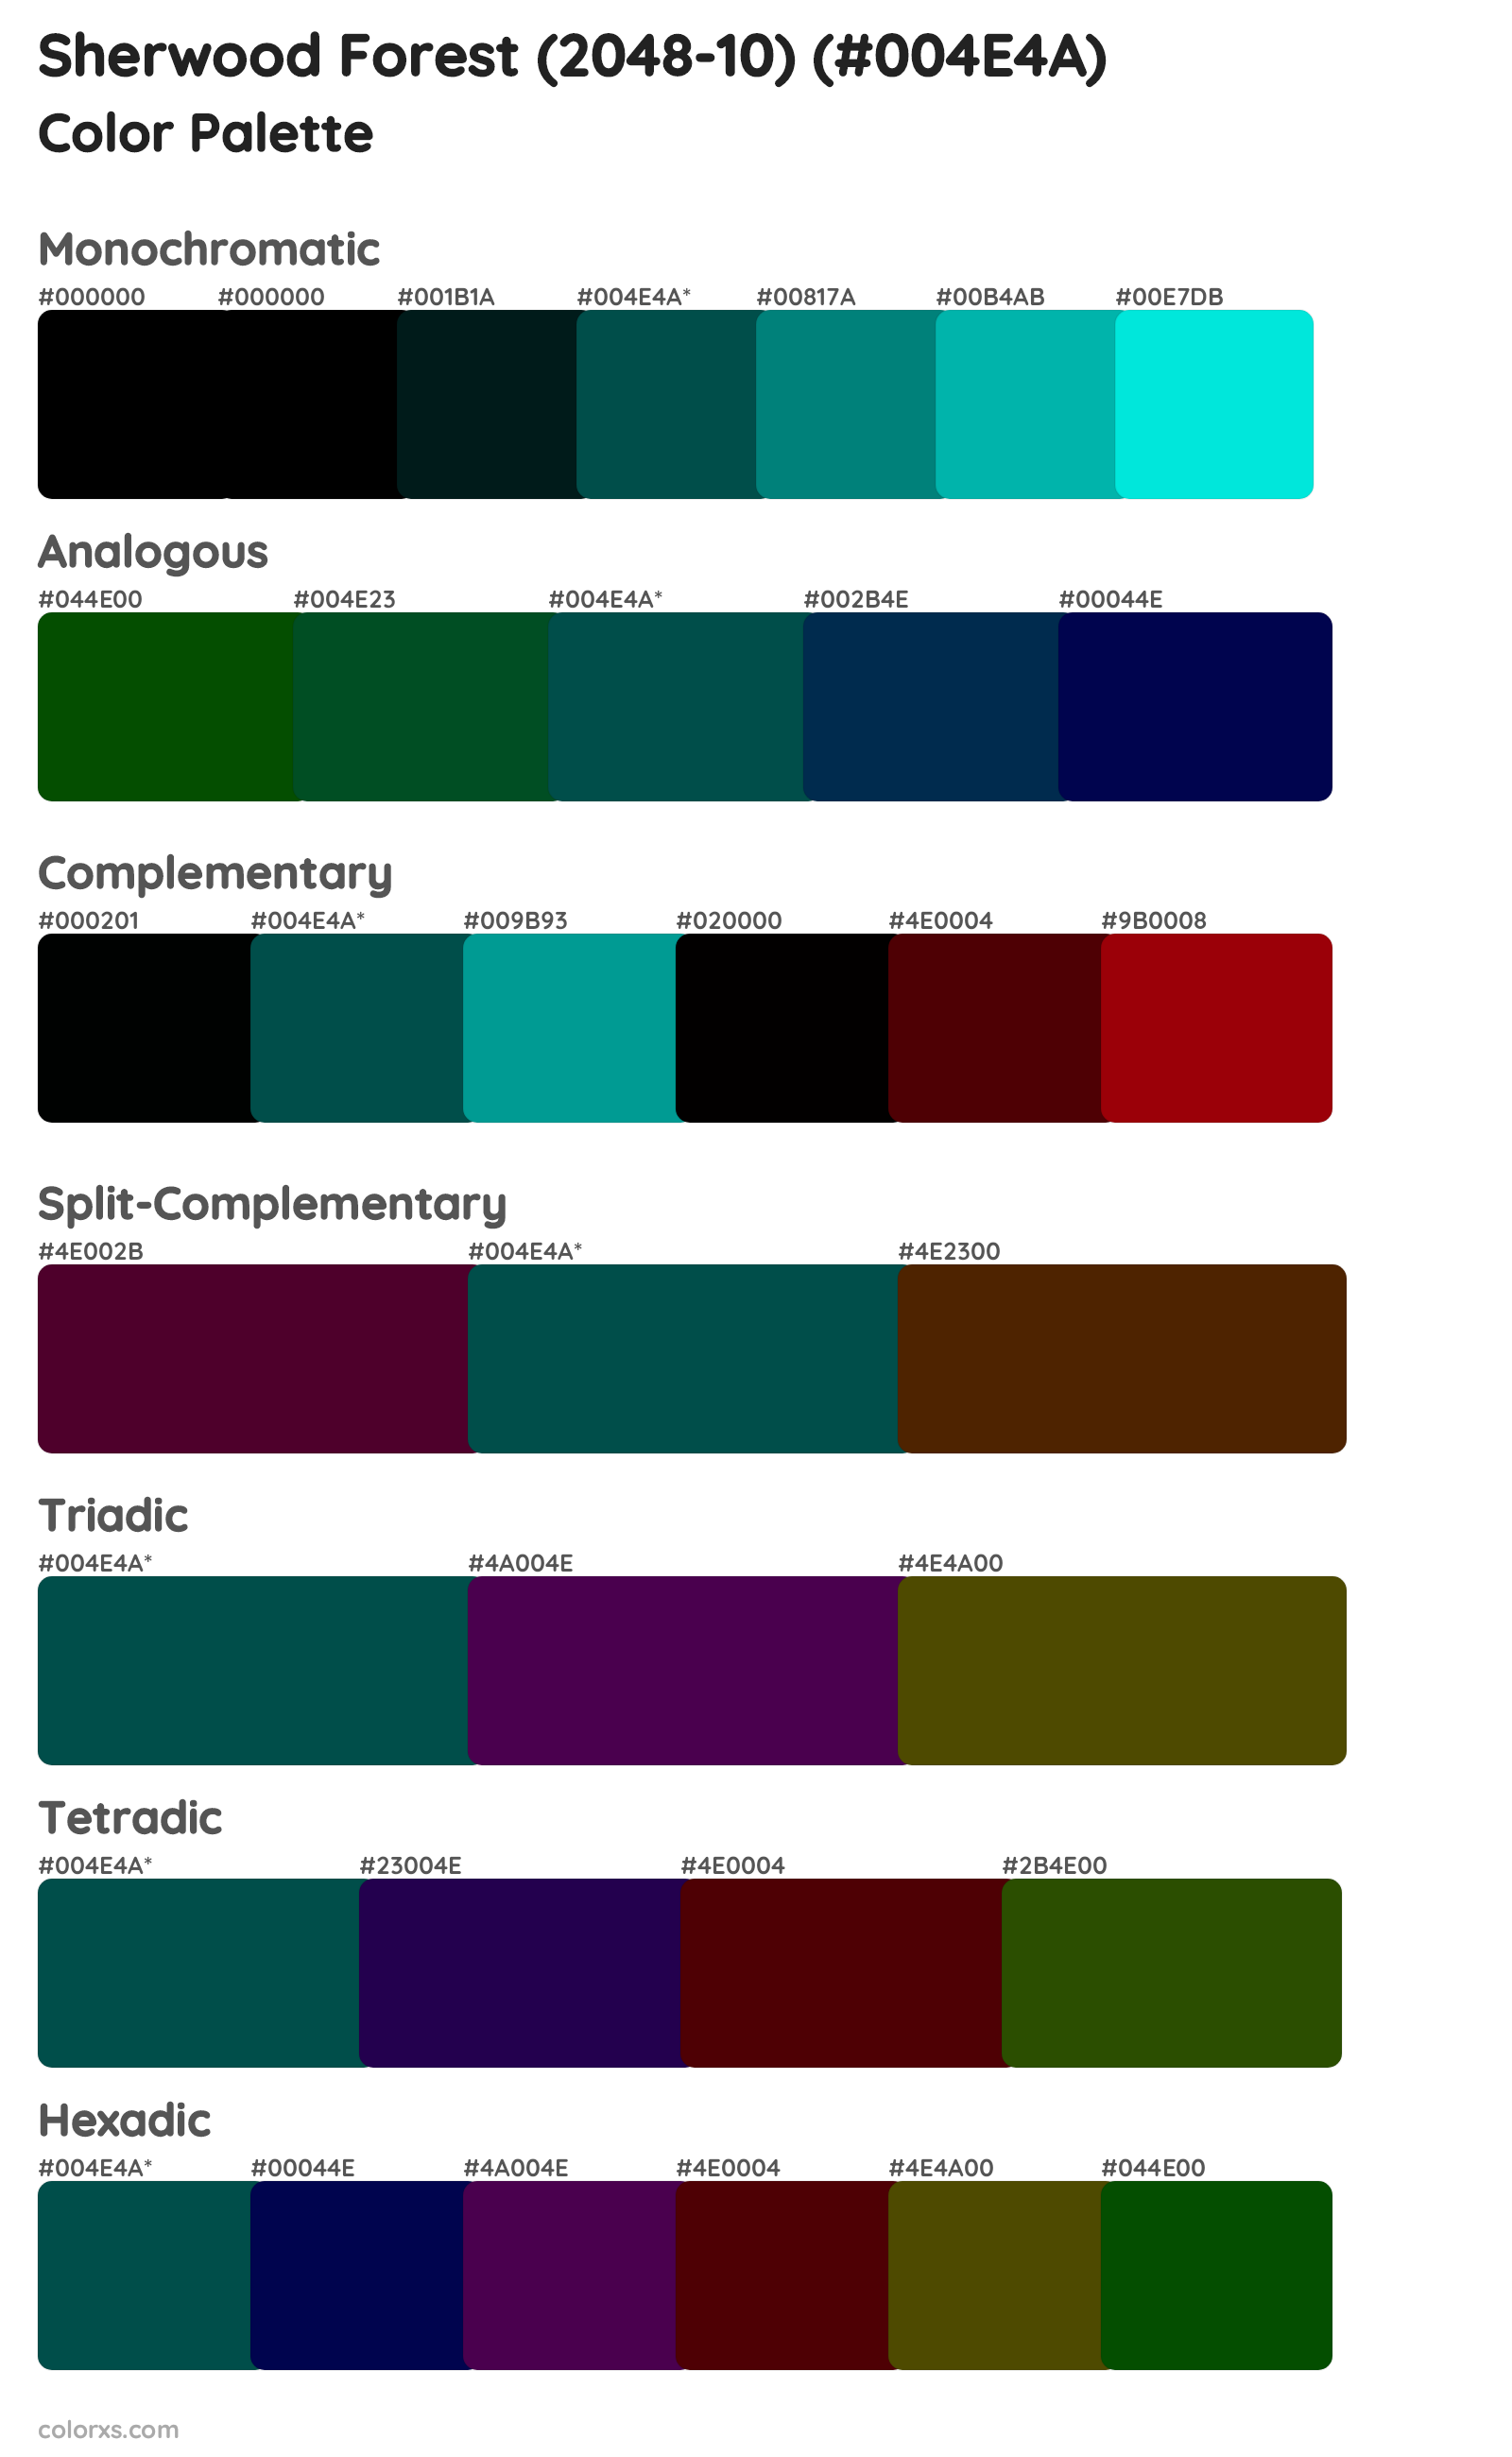 Sherwood Forest (2048-10) Color Scheme Palettes